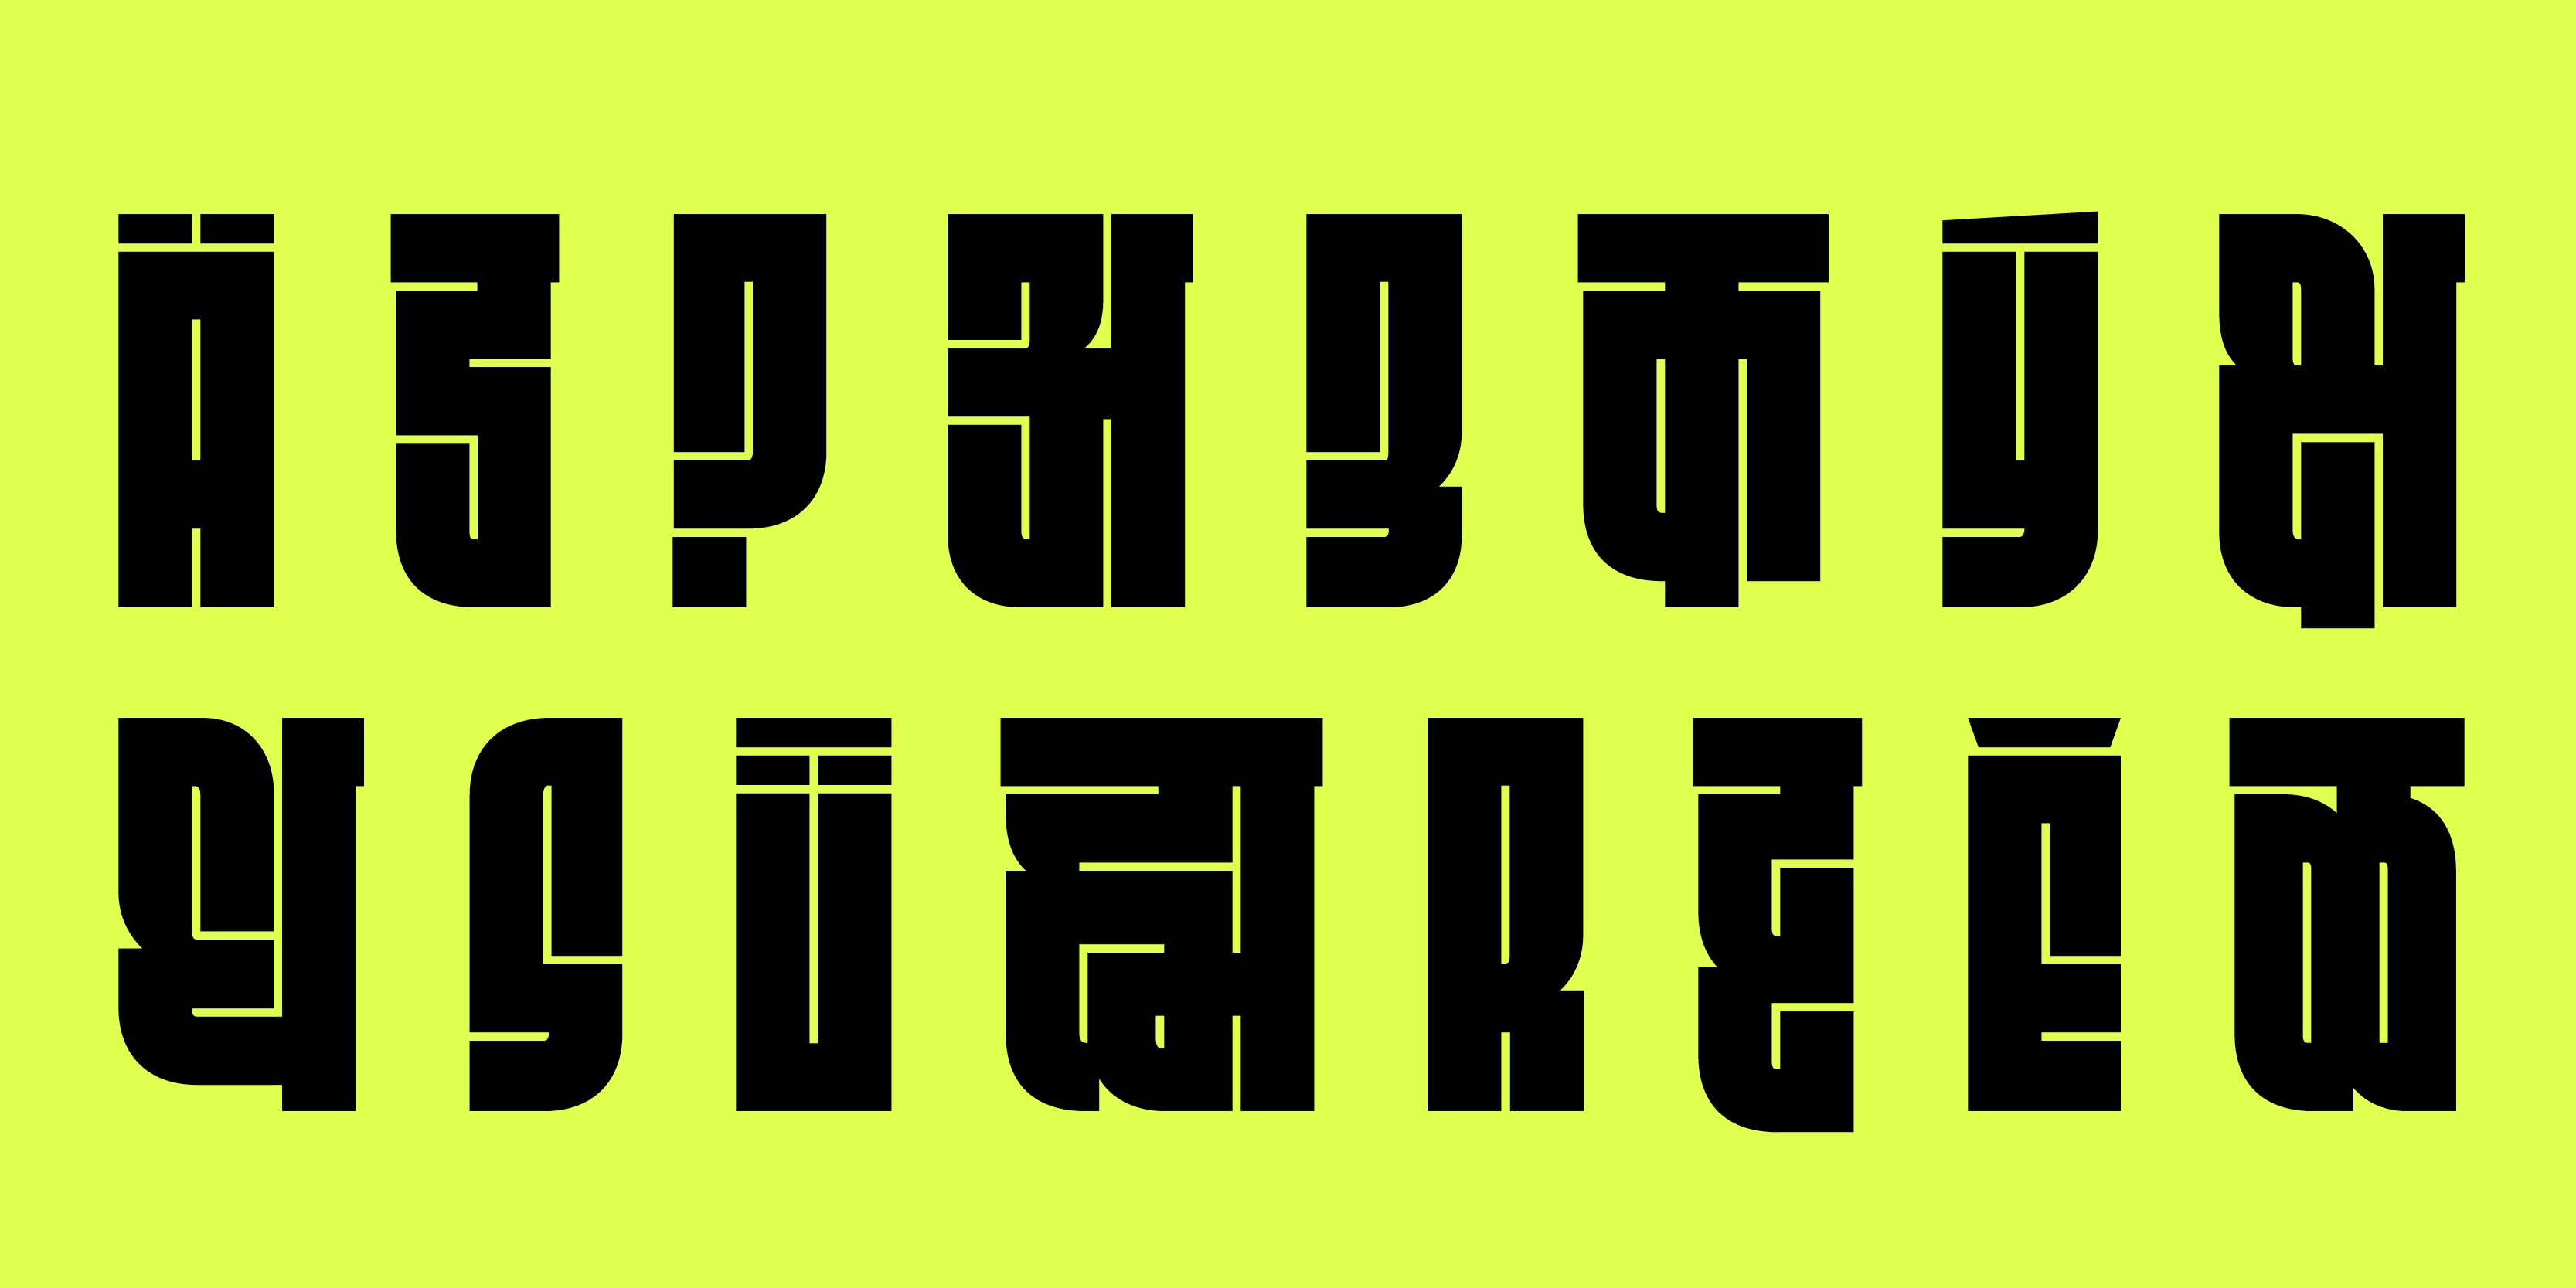 Card displaying Fit Devanagari typeface in various styles